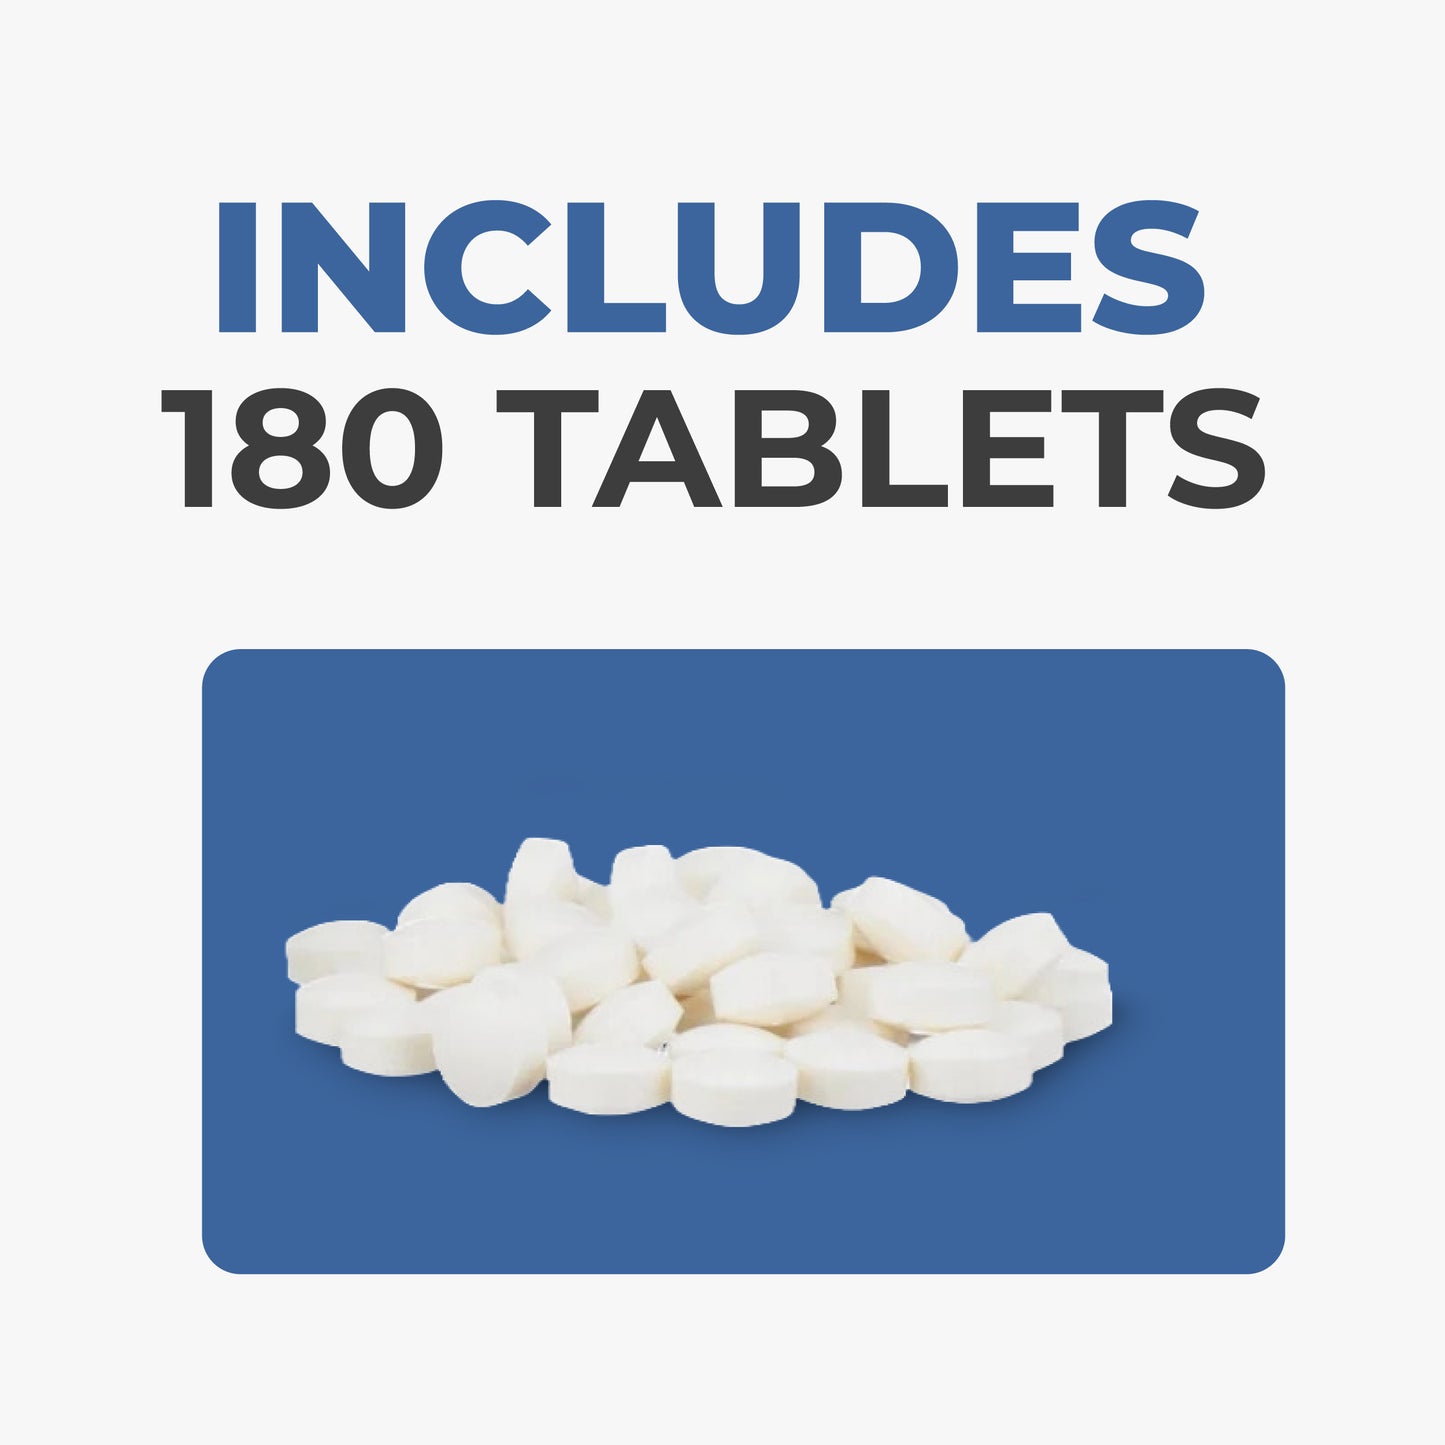 Geri-Care Melatonin Natural Sleep Aid, 180 Tablet per Bottle